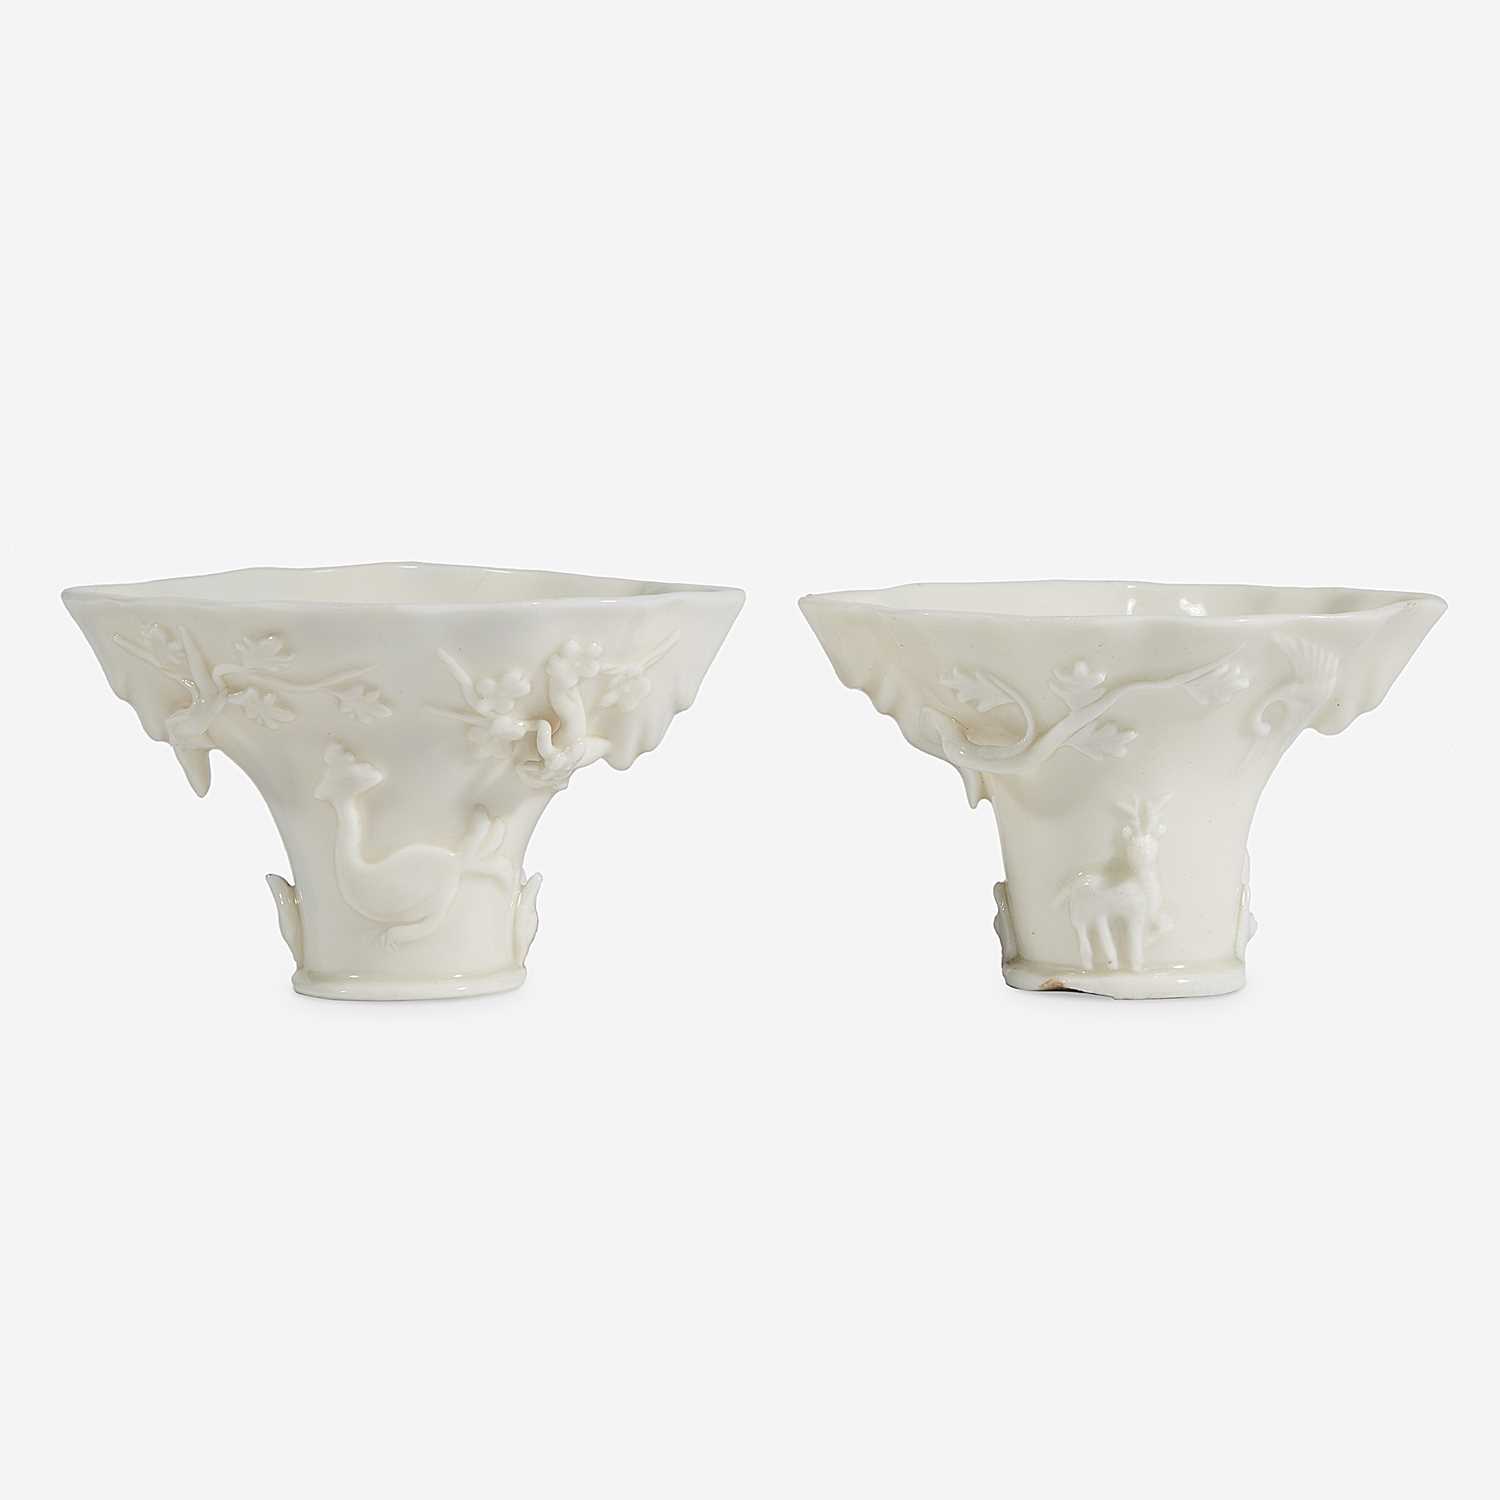 Lot 8 - Two similar Chinese Dehua porcelain libation cups 德化窑盃两件